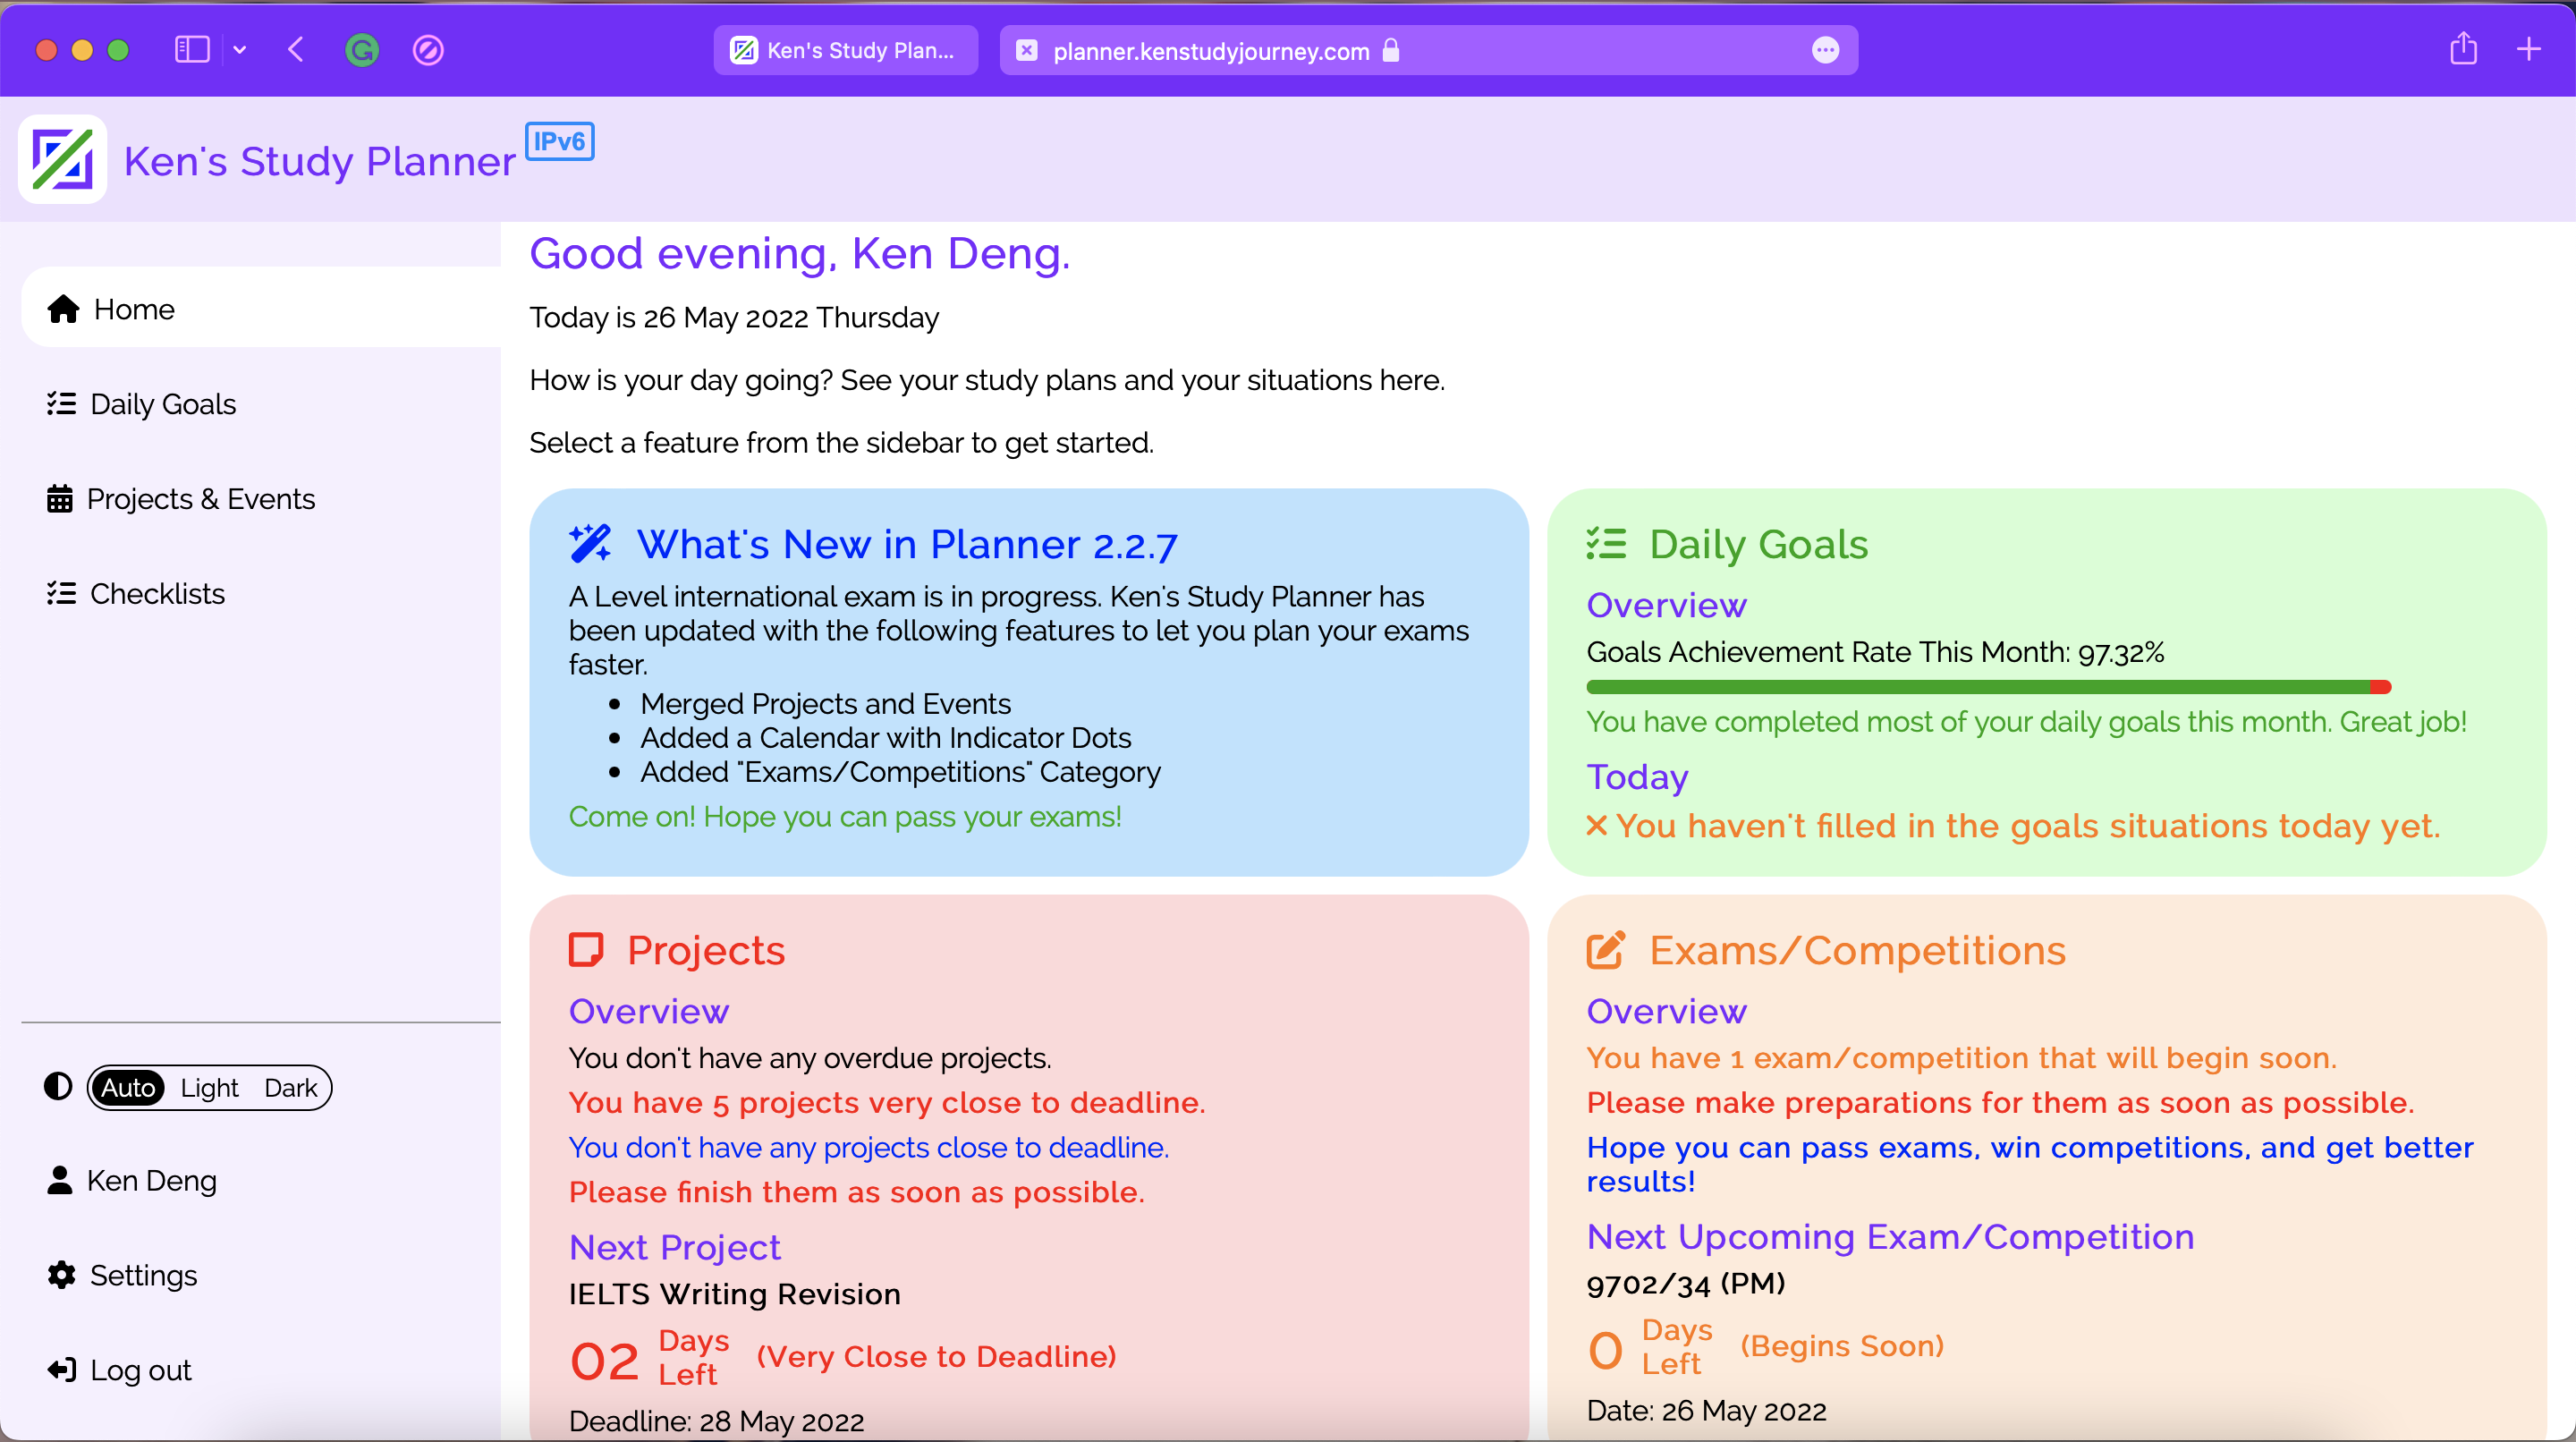 Ken's Study Planner 2.2.7 Main Interface